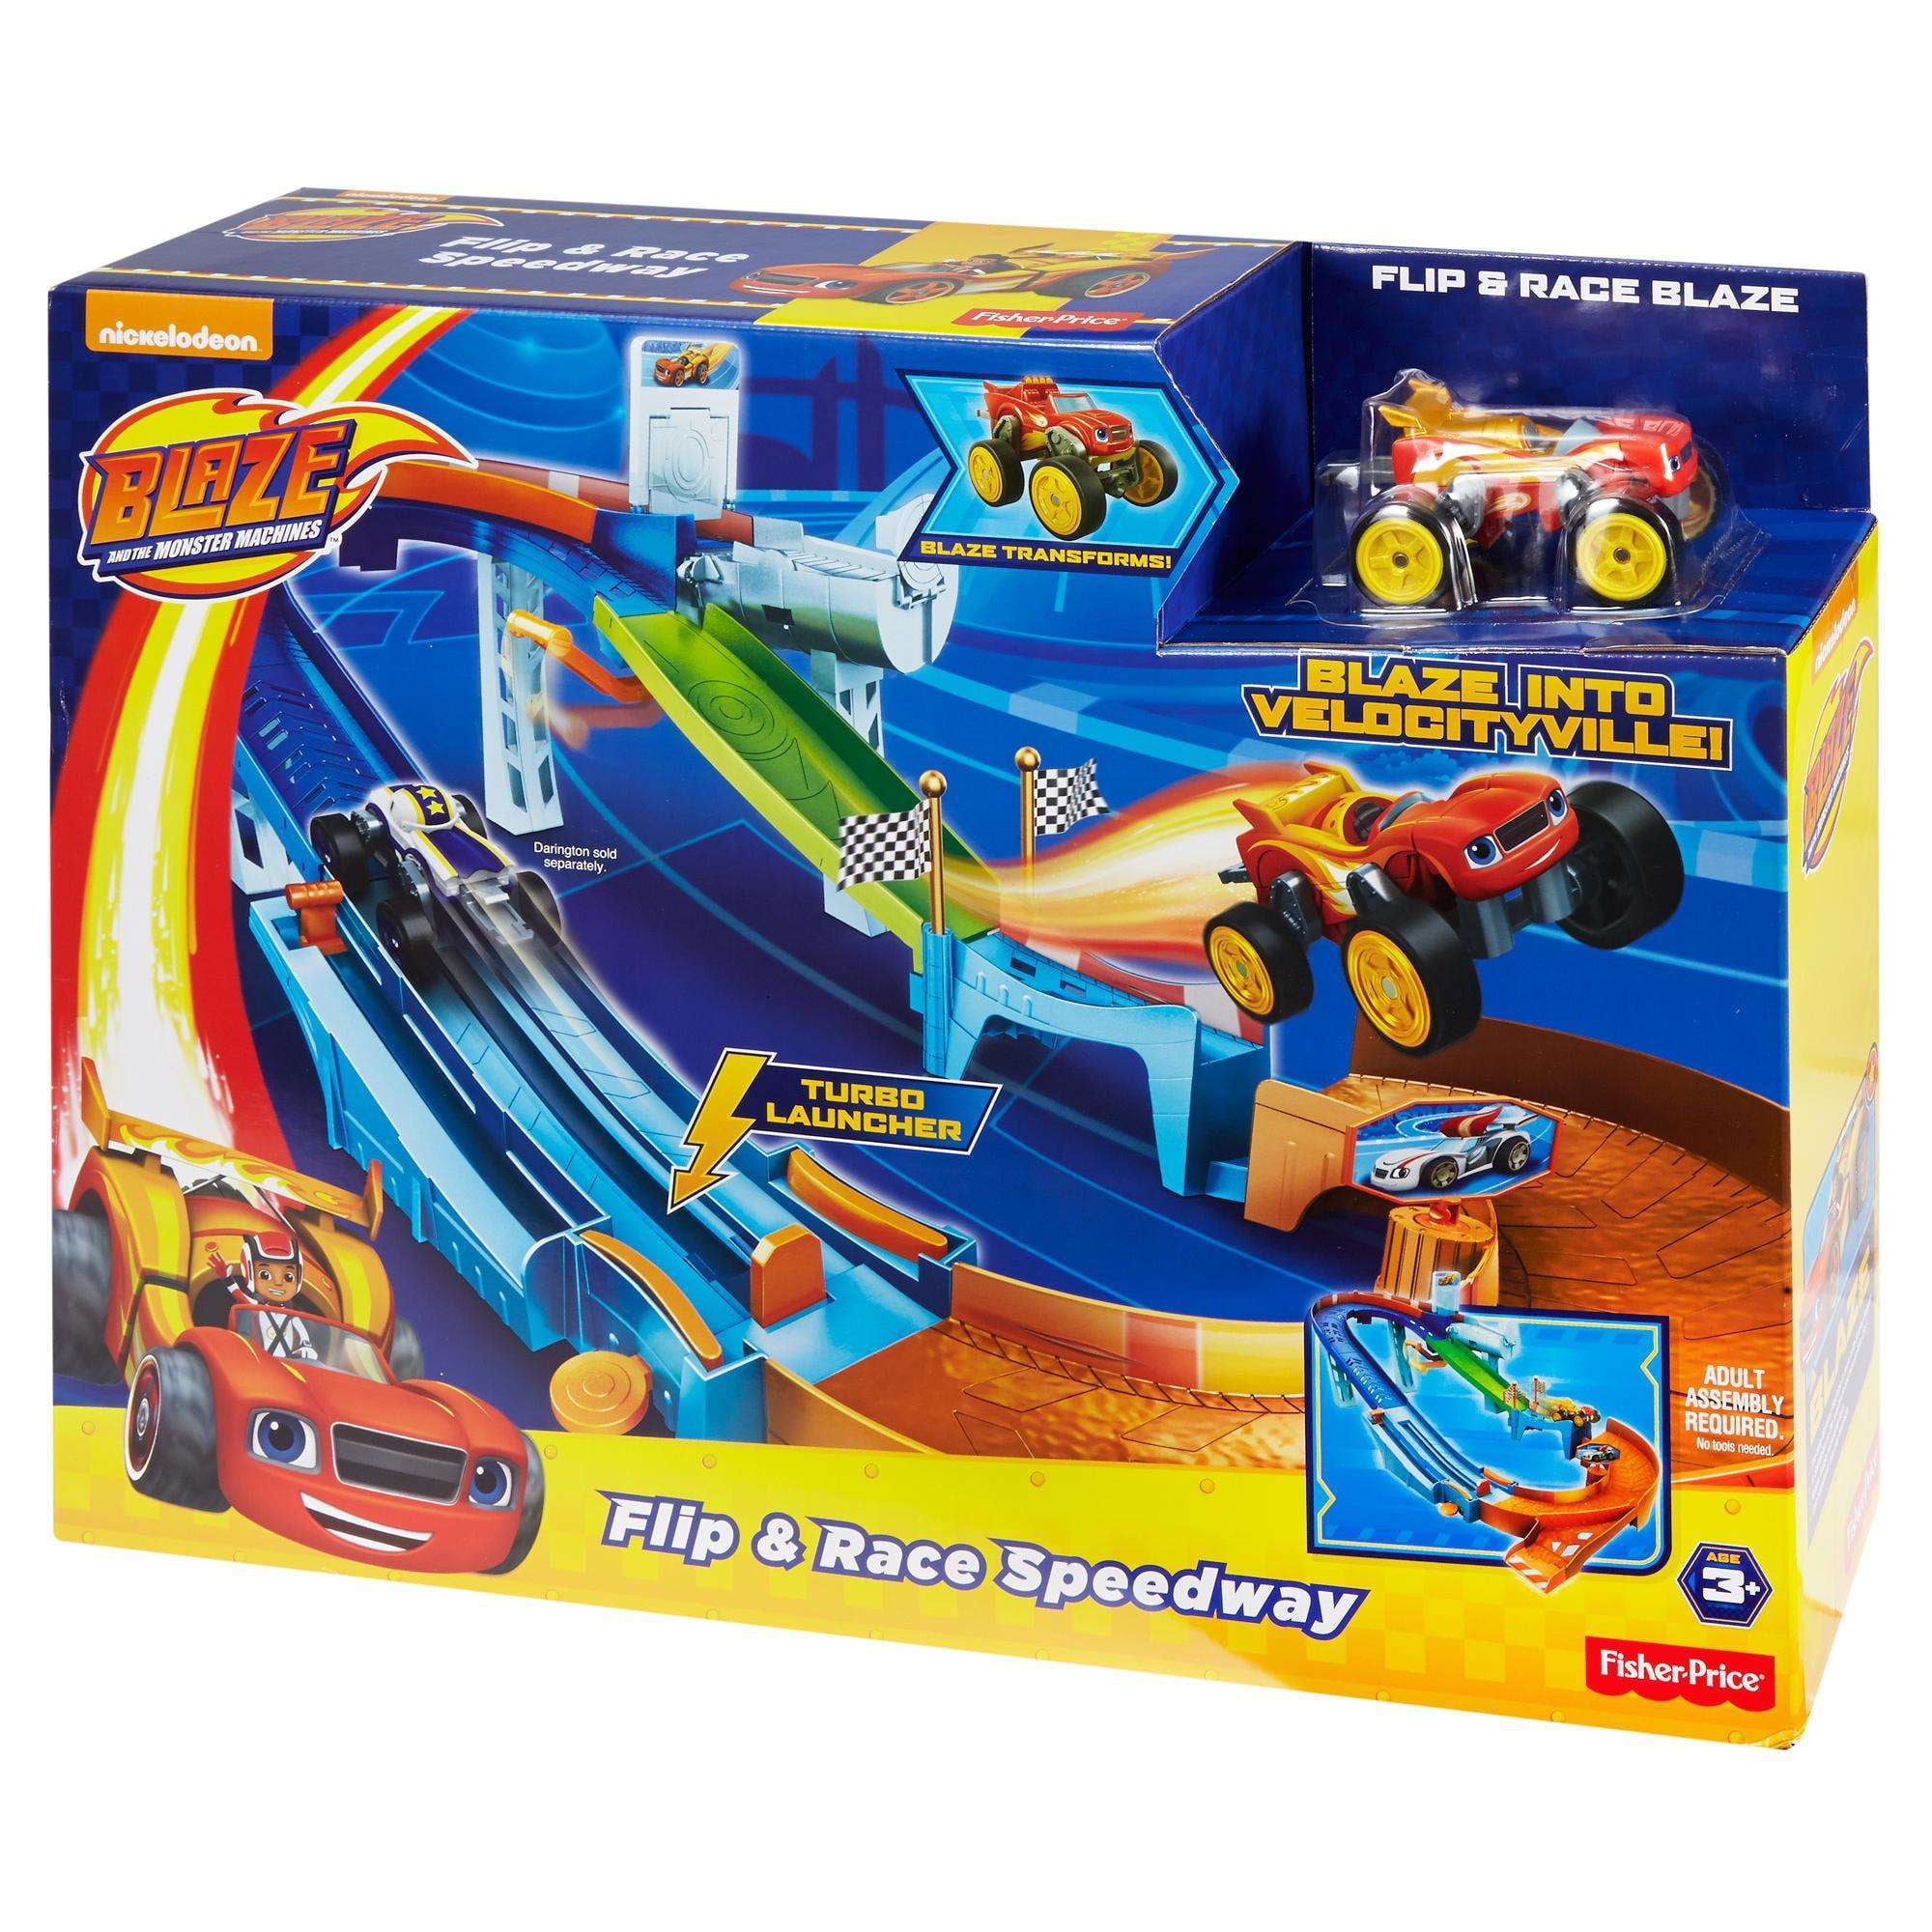 transformers allspark toy